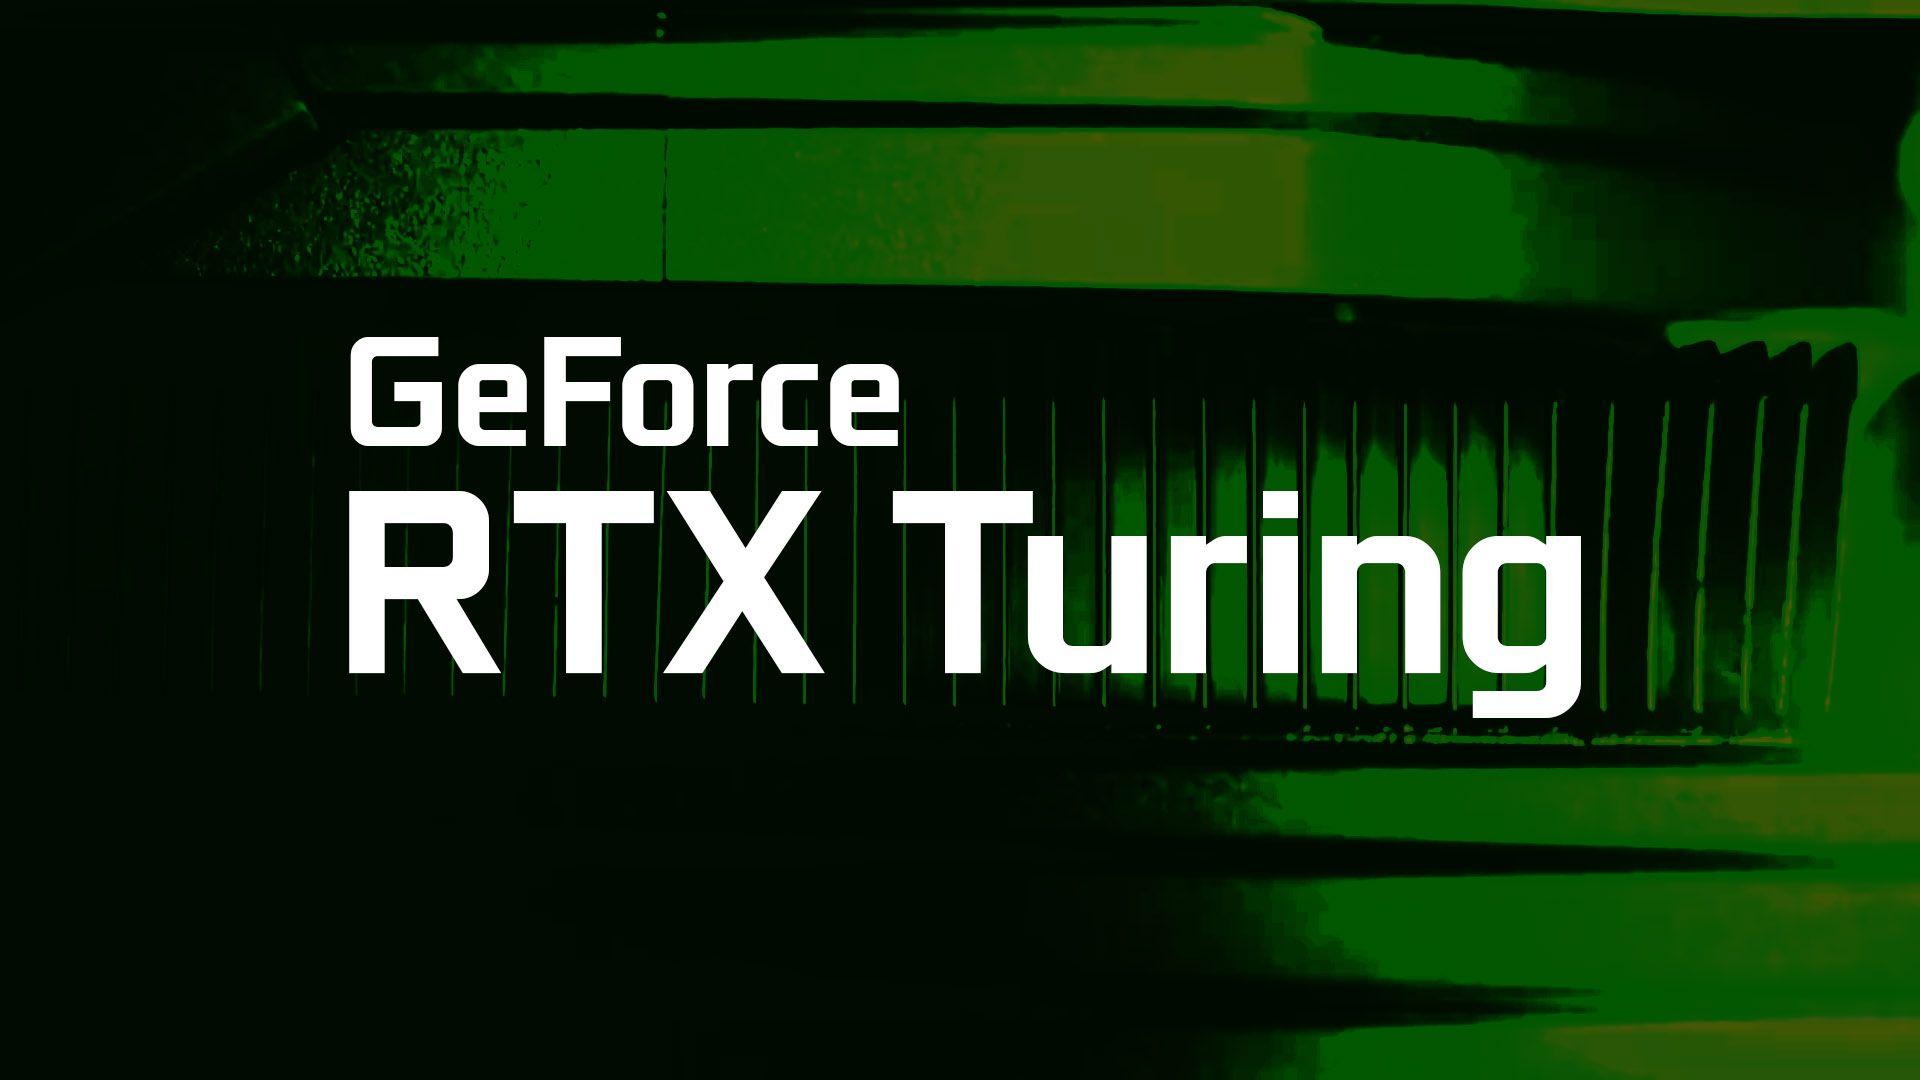 NVIDIA GeForce RTX 2080 Ti 11GB and RTX 2080 8GB Graphics Card Specs